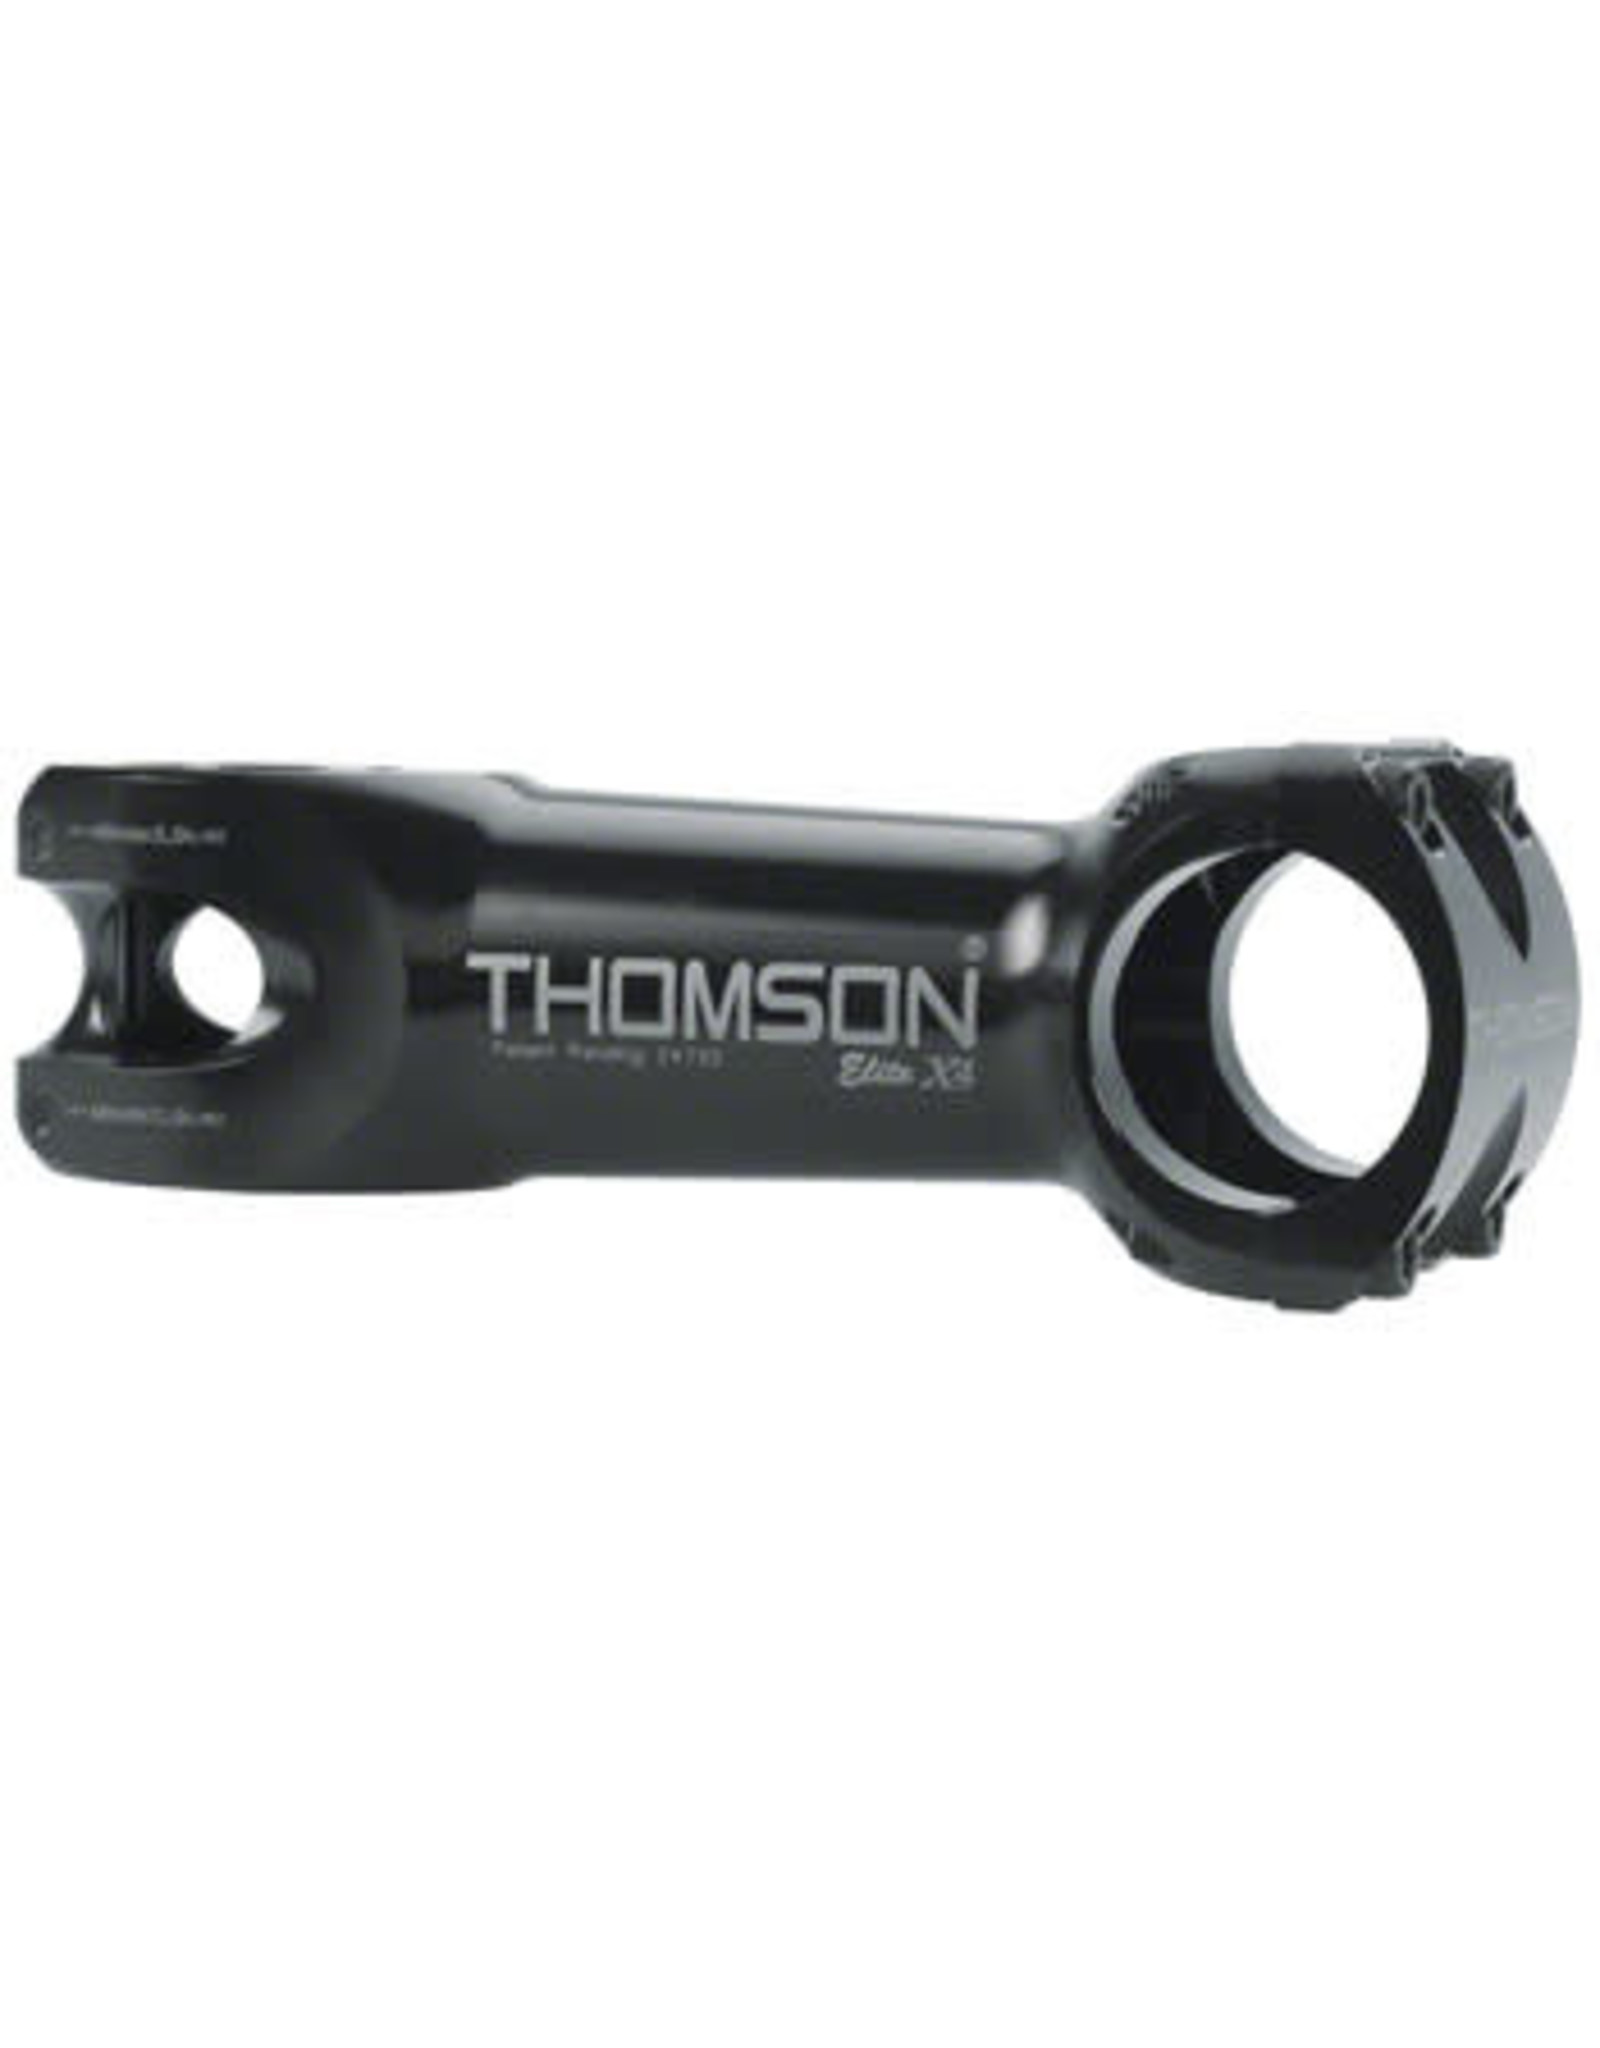 Thomson Thomson Elite X4 Mountain Stem - 70mm, 31.8 Clamp, +/-10, 1 1/8", Aluminum, Black